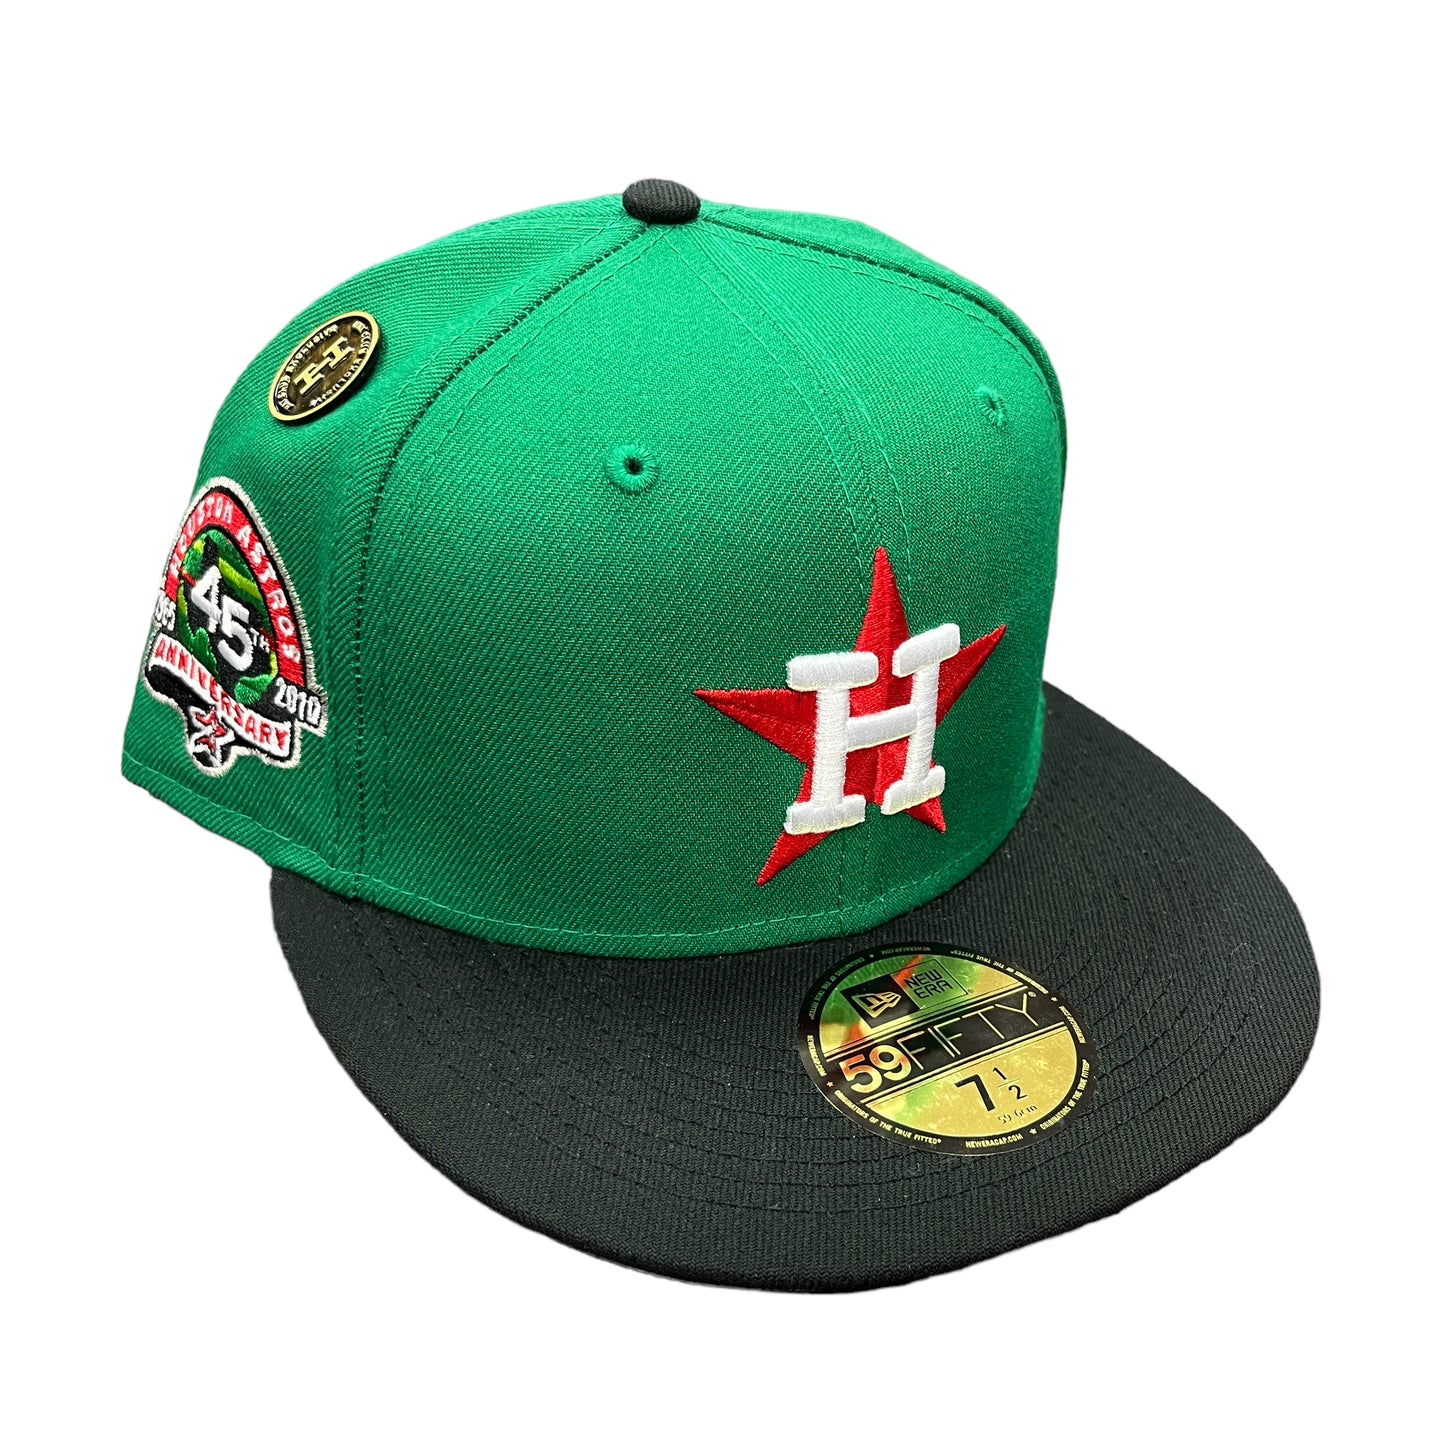 Astros Green/Black Hat